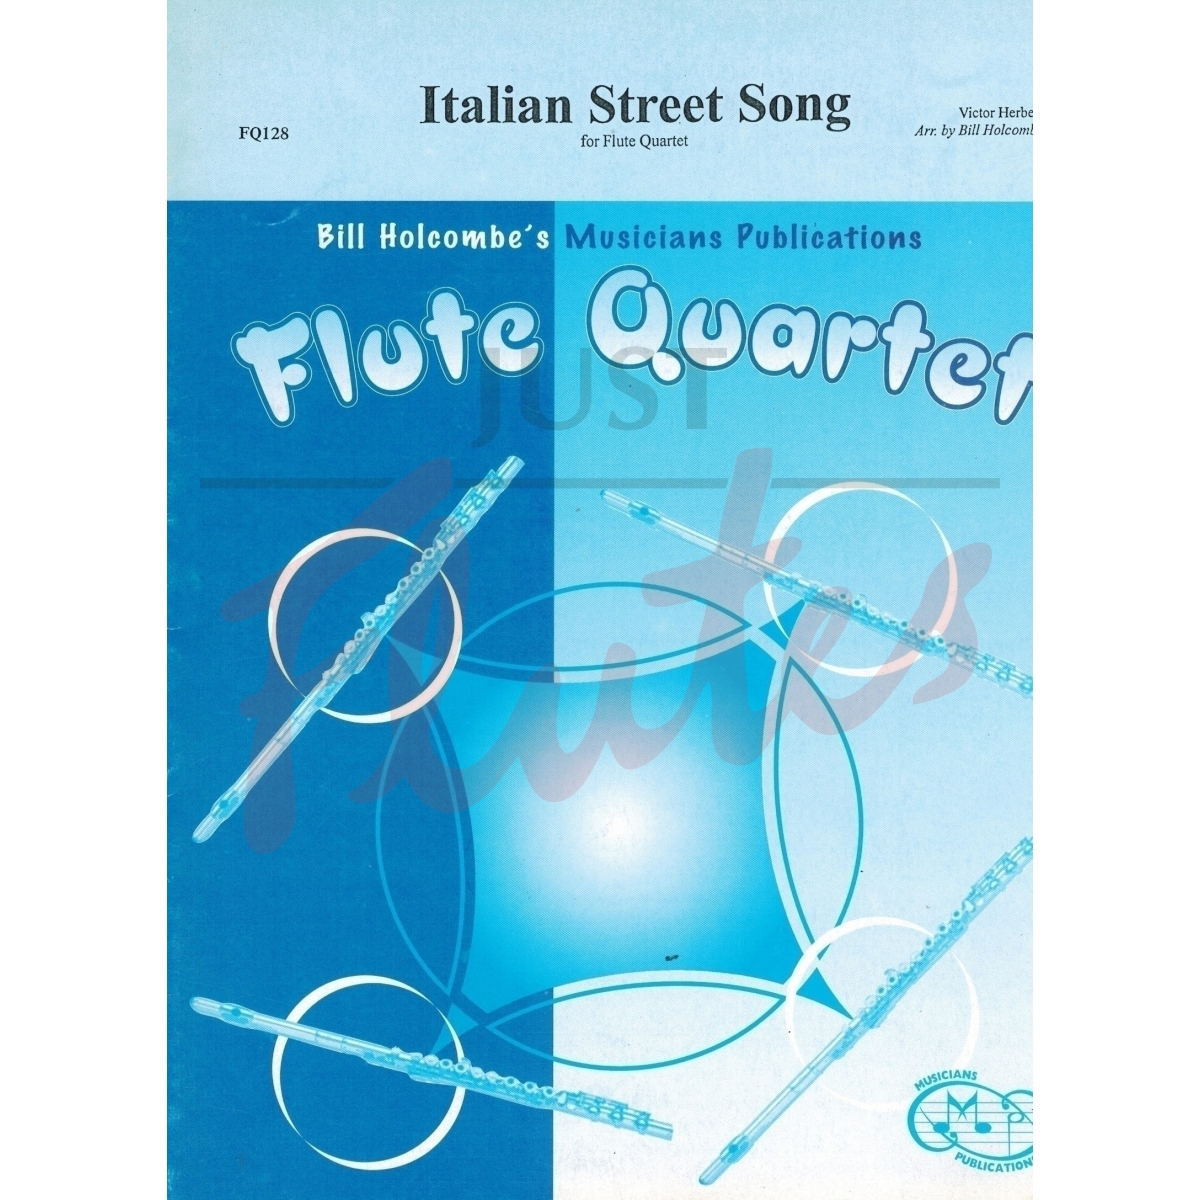 Italian Street Song [Flute Quartet]